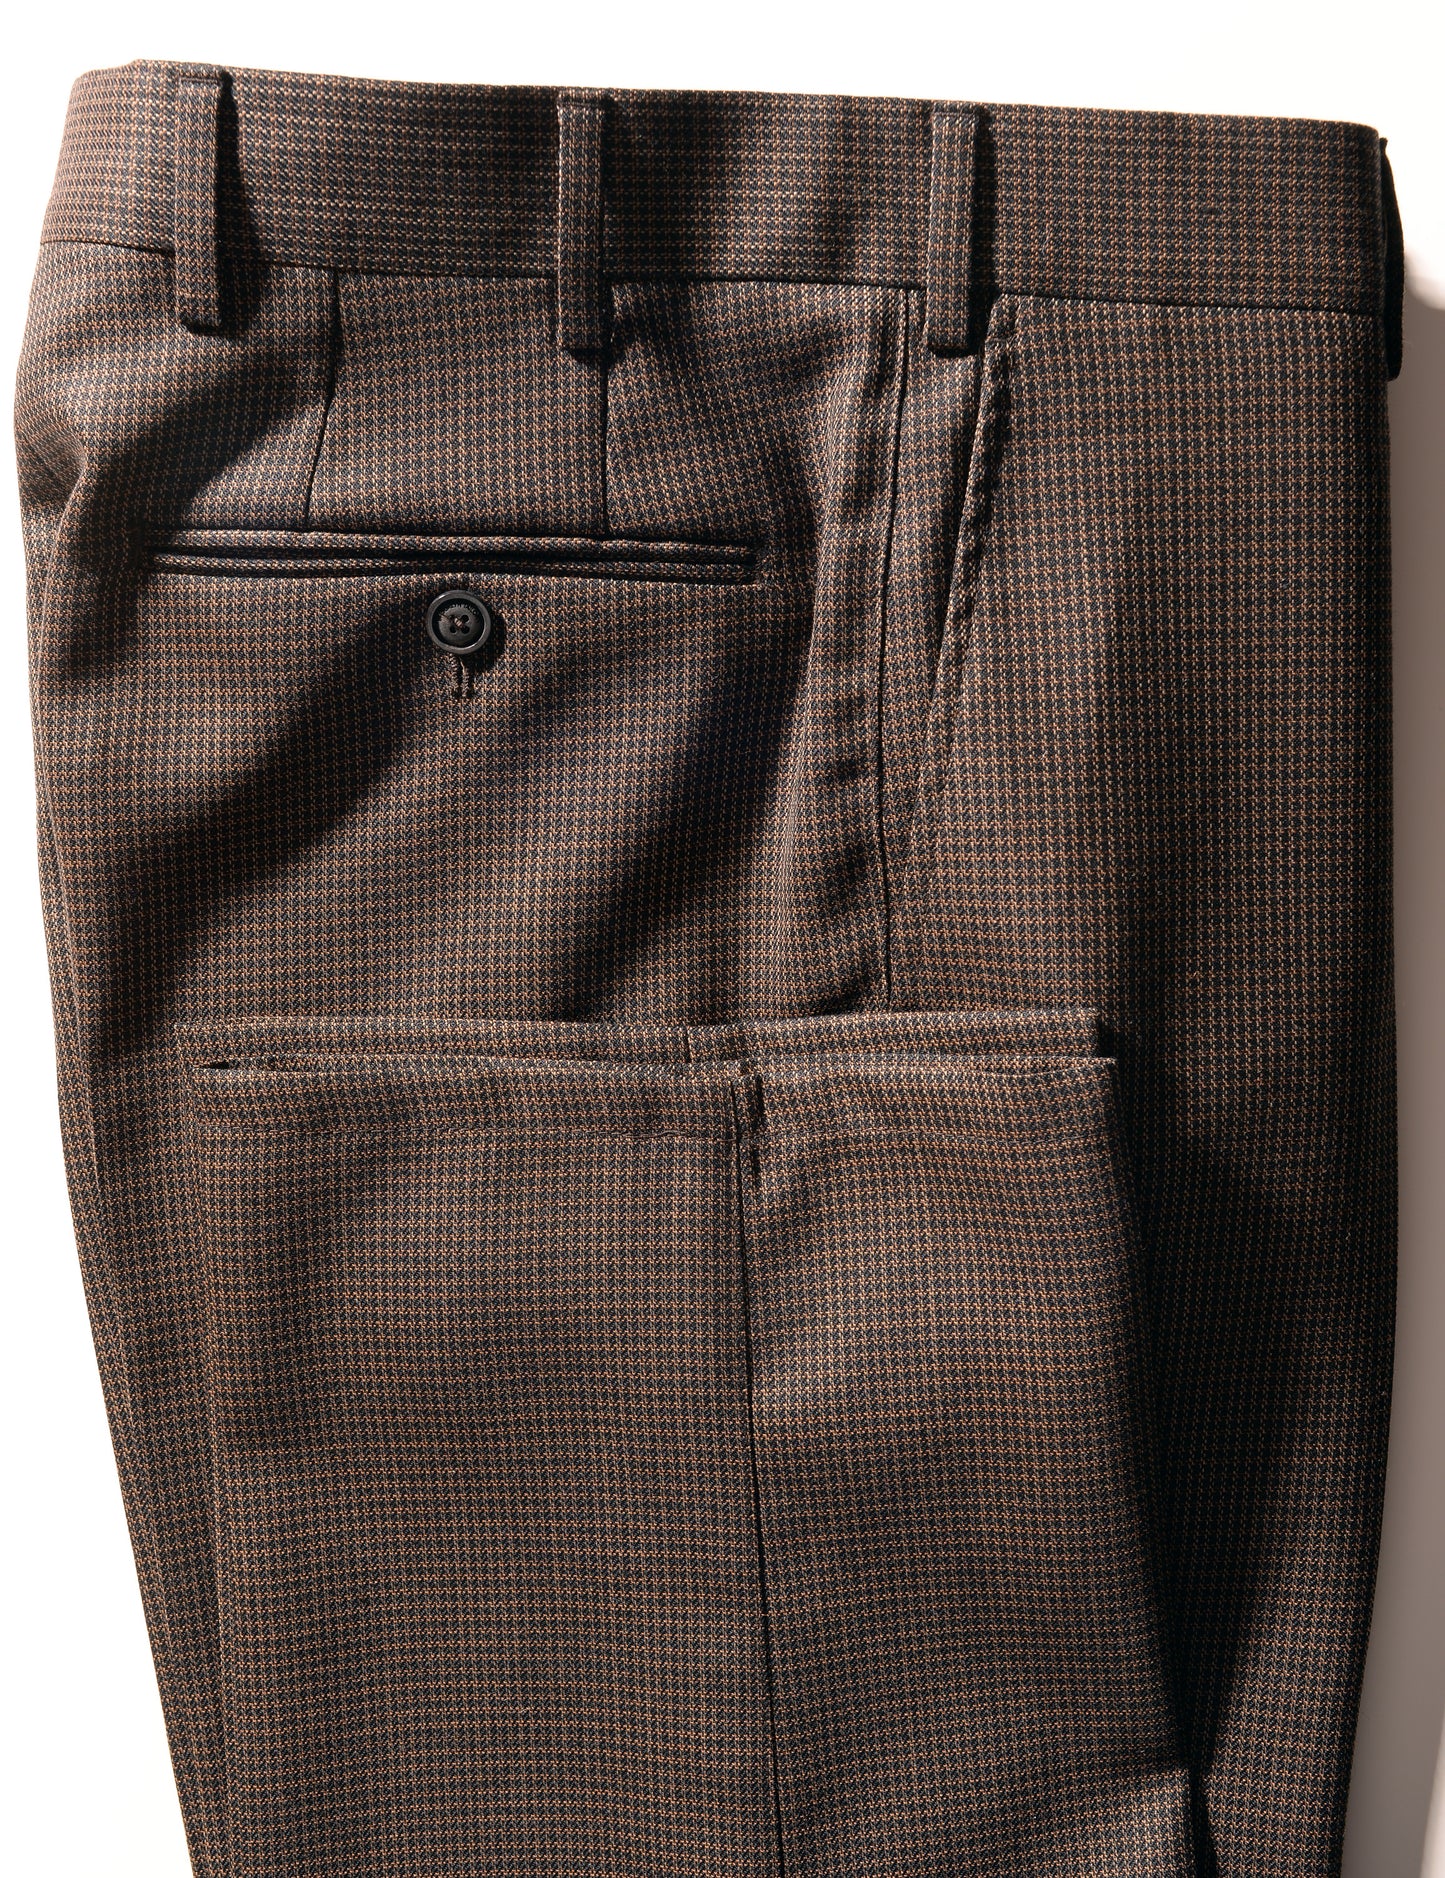 Folded side detail shot of Brooklyn Tailors BKT36 Straight Leg Trouser in Wool Grid Weave - Blackened Earth showing hem, back pocket, side pocket, and waistband